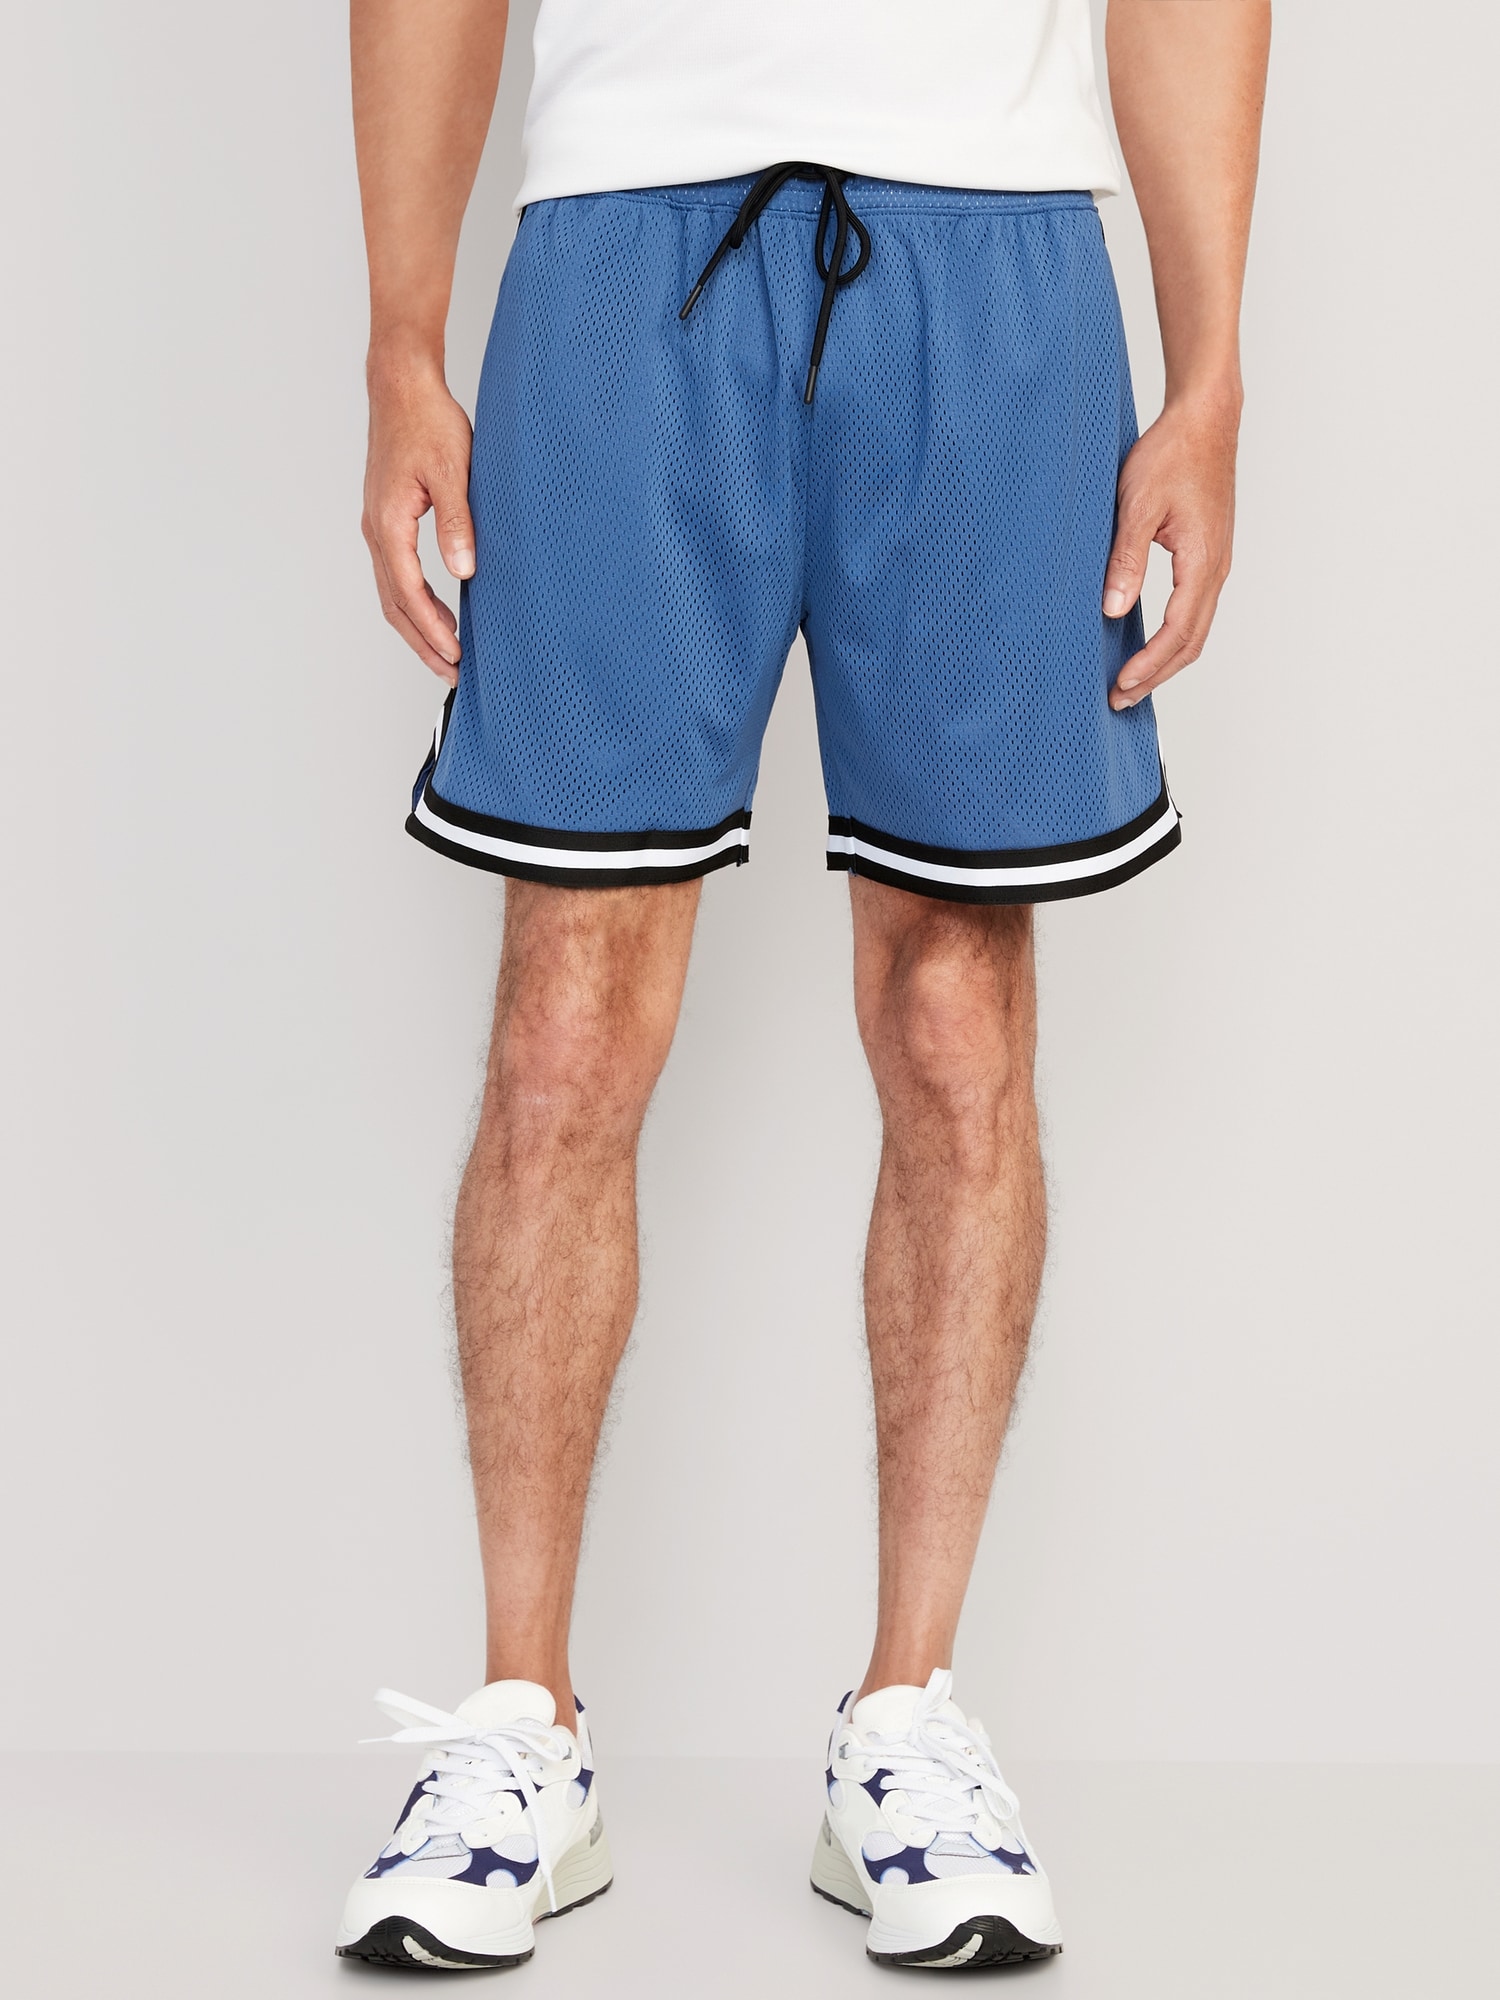 Go-Dry Mesh Basketball Shorts -- 7-inch inseam